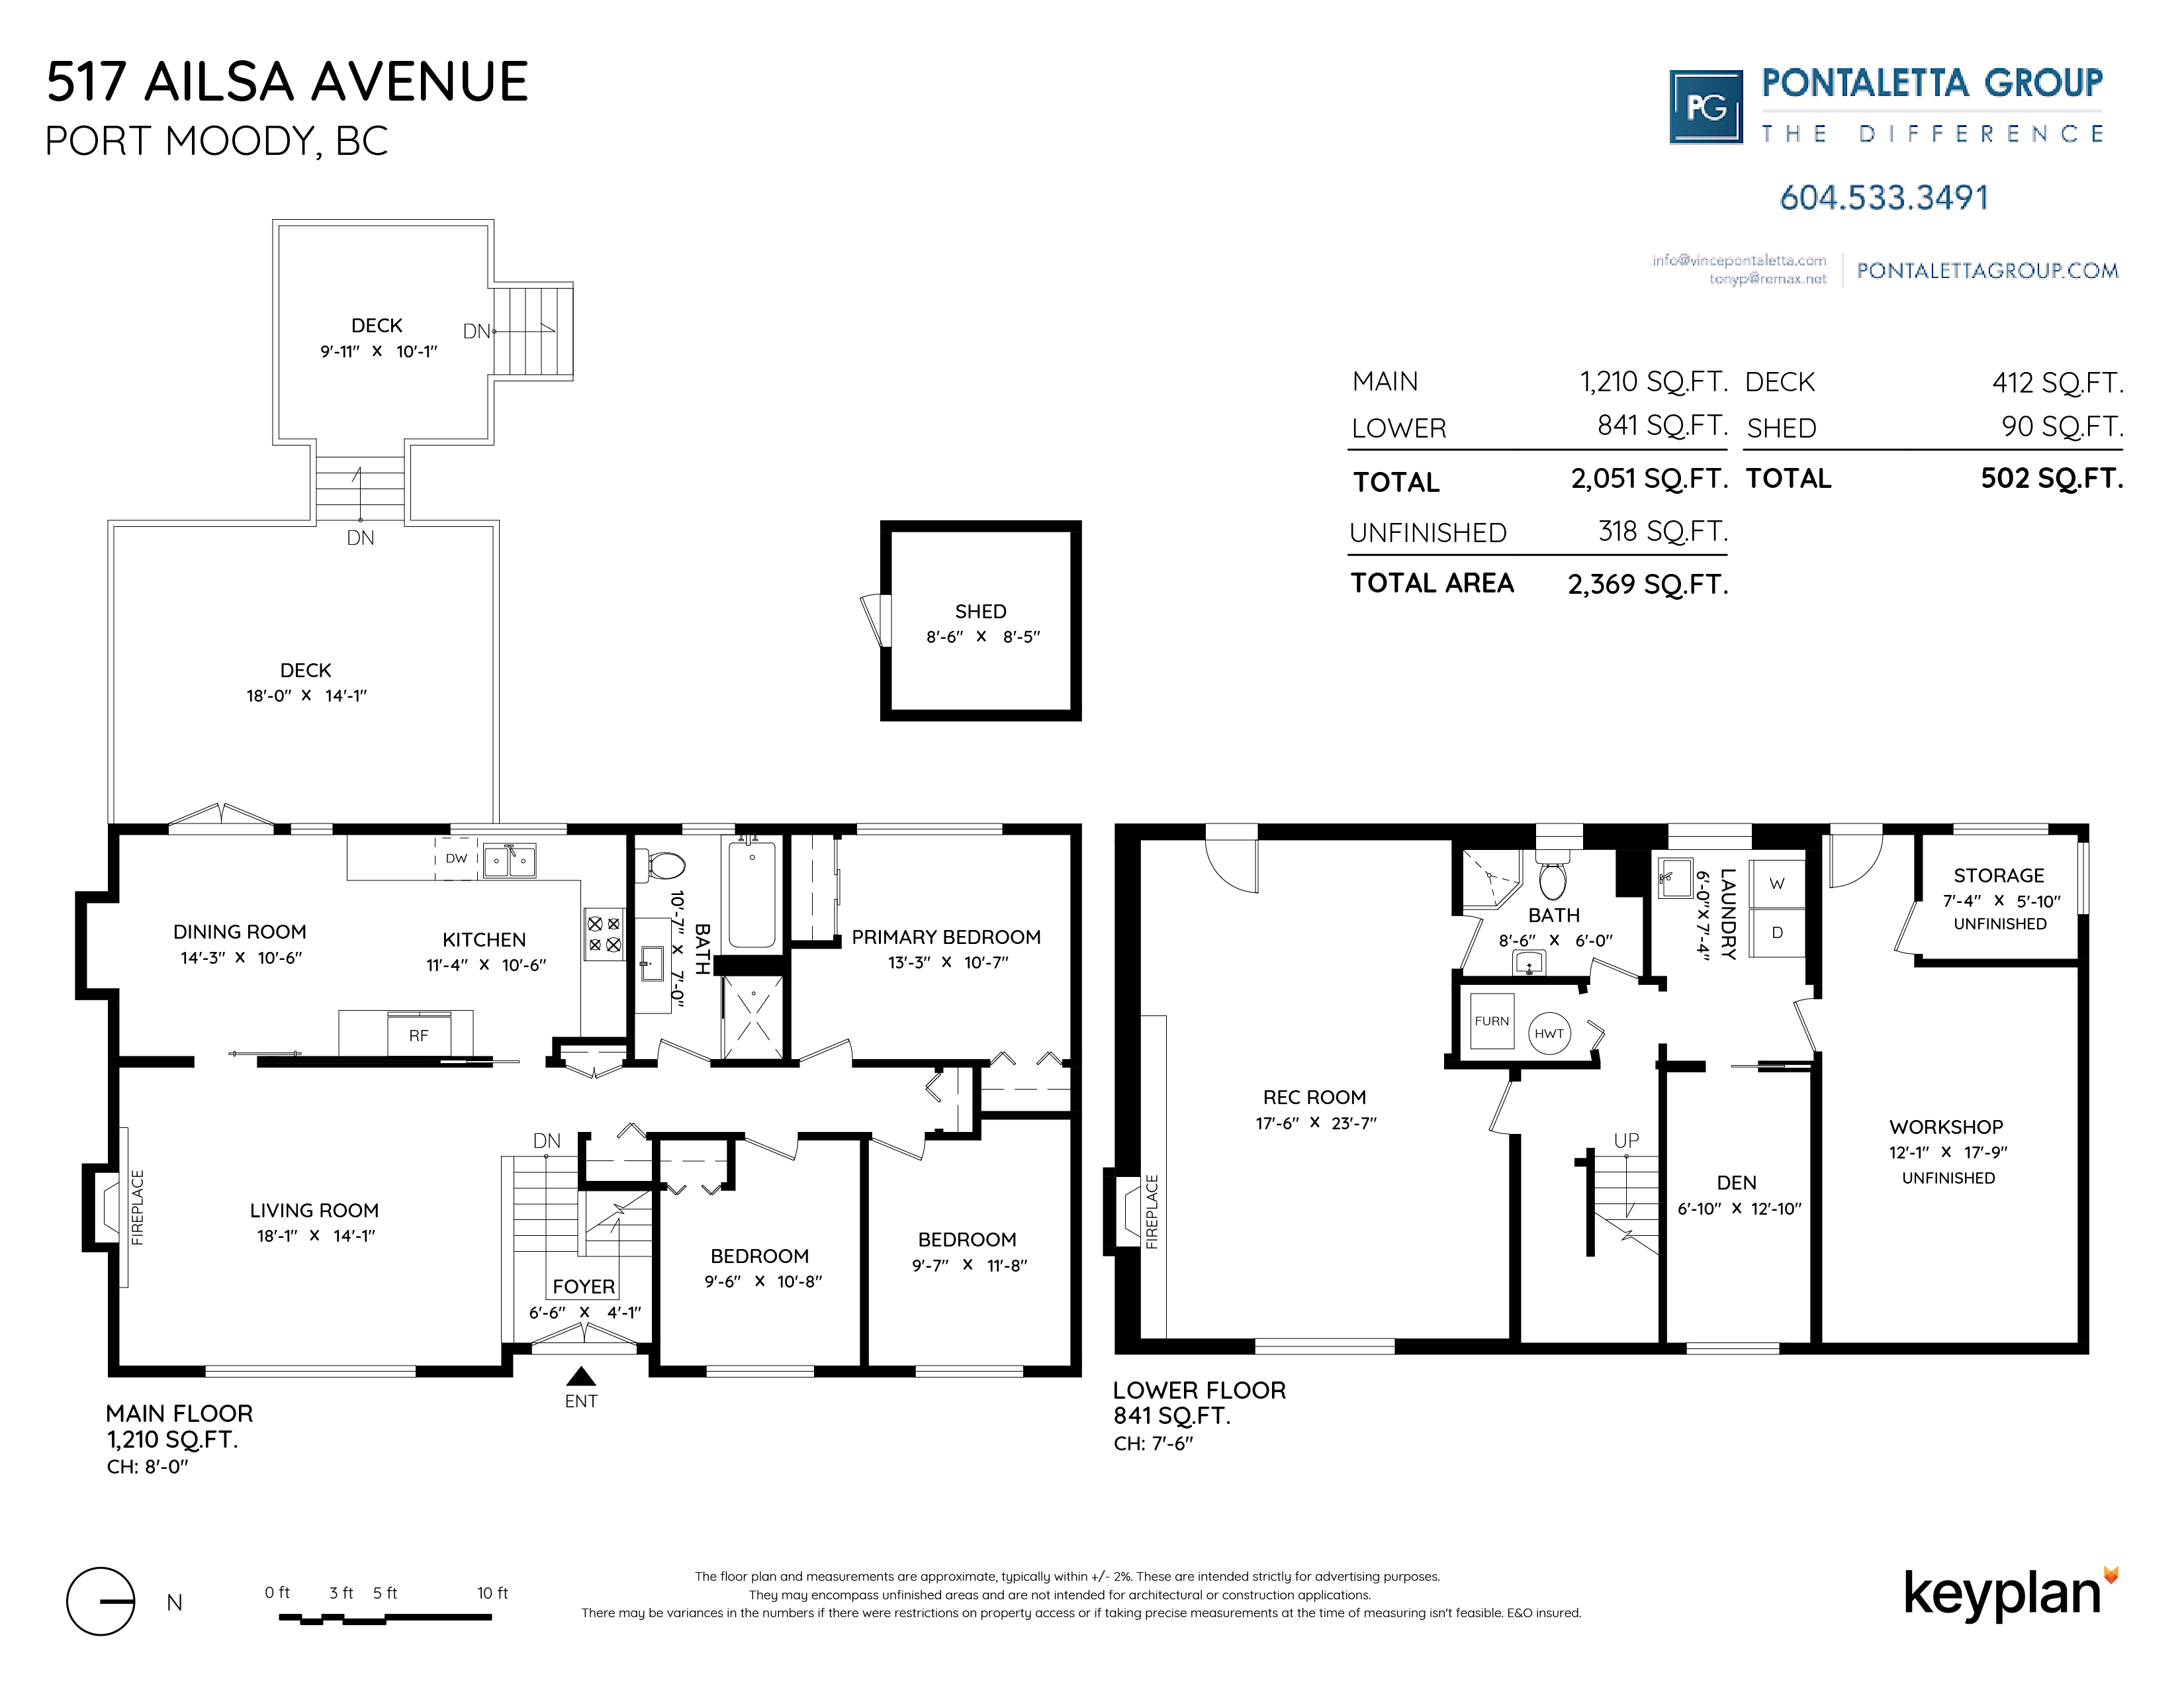 Pontaletta Group - 517 Ailsa Avenue, Port Moody, BC, Canada | Floor Plan 1